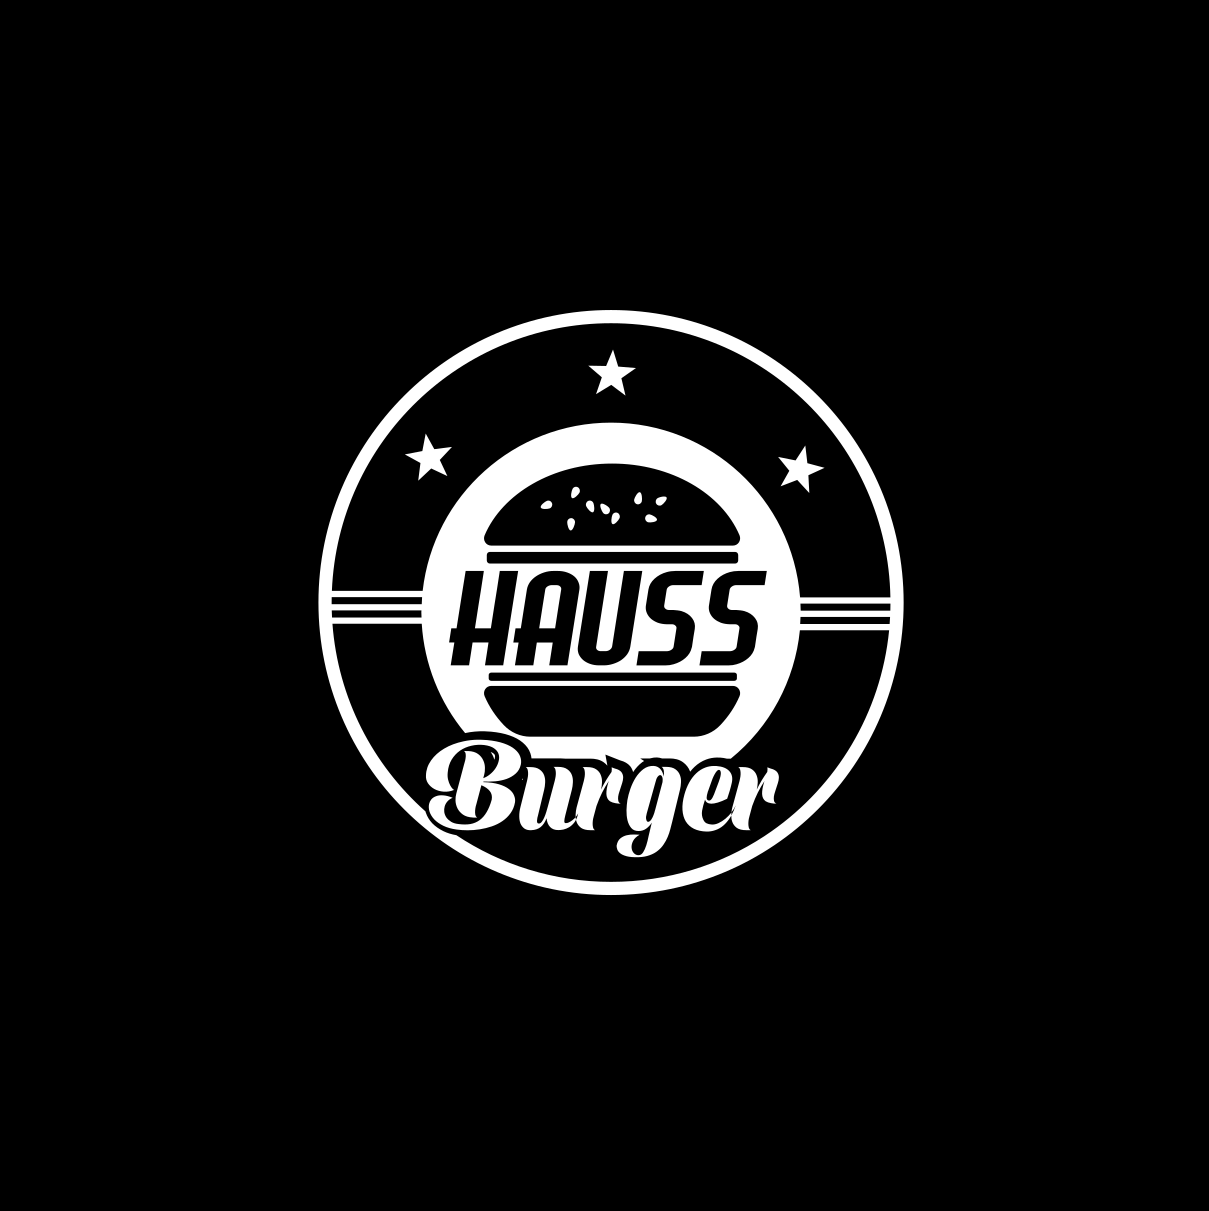 Hauss Burger